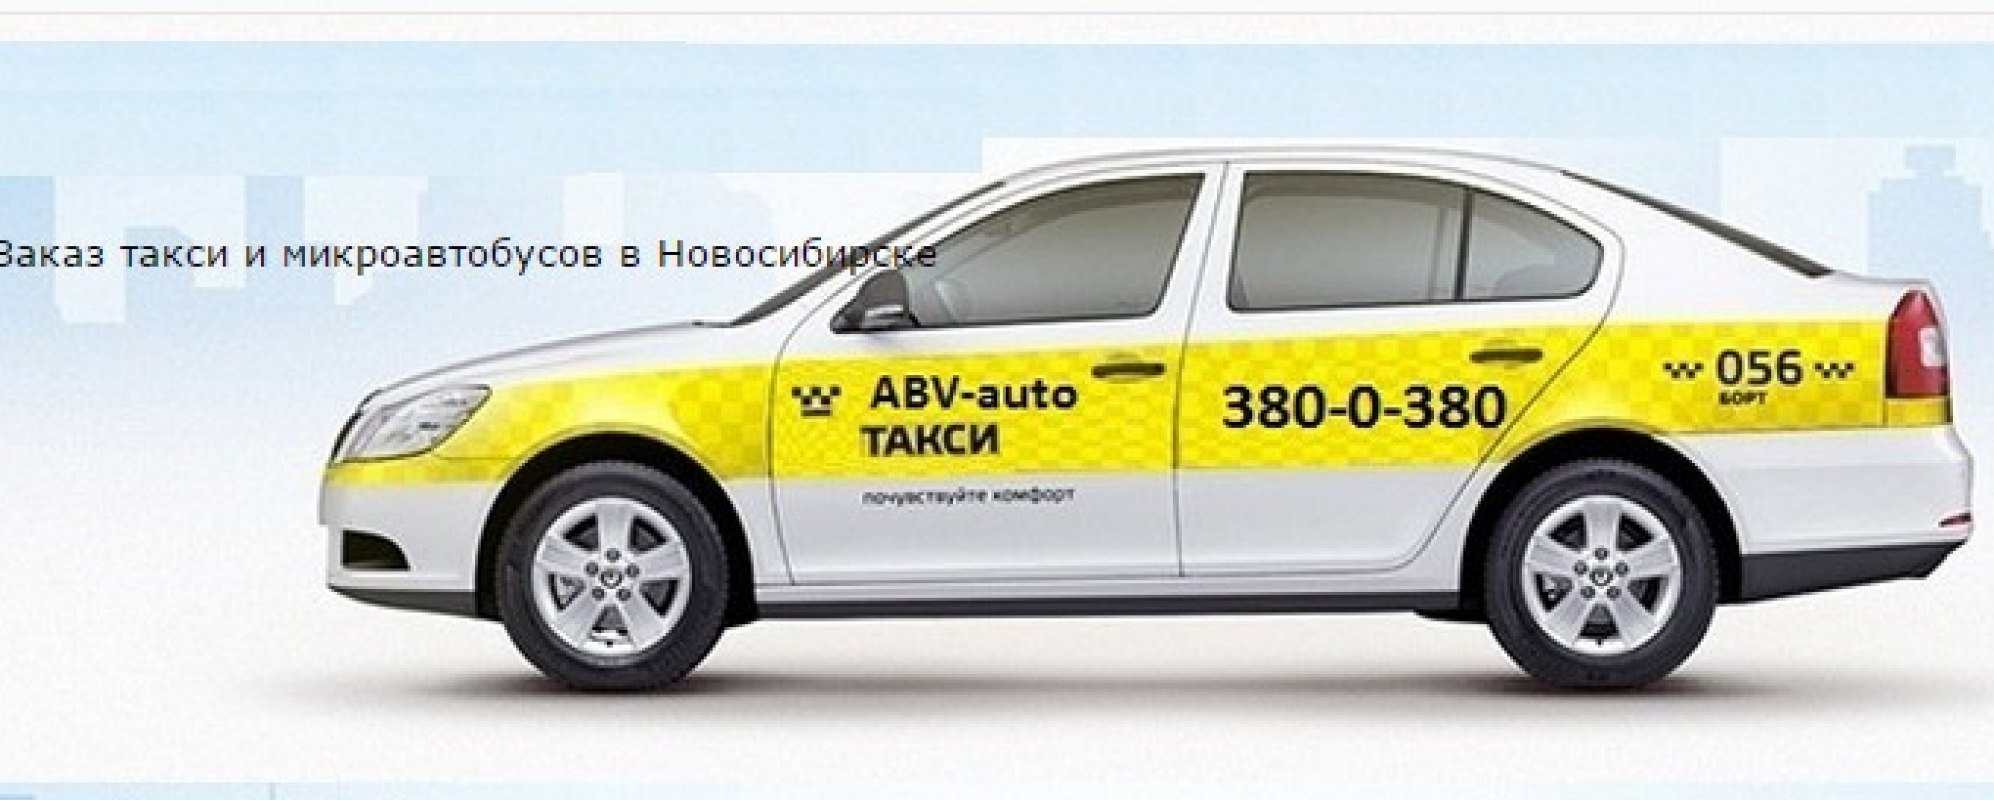 Фотографии такси 
            ABV-auto, служба заказа такси от 99 рублей